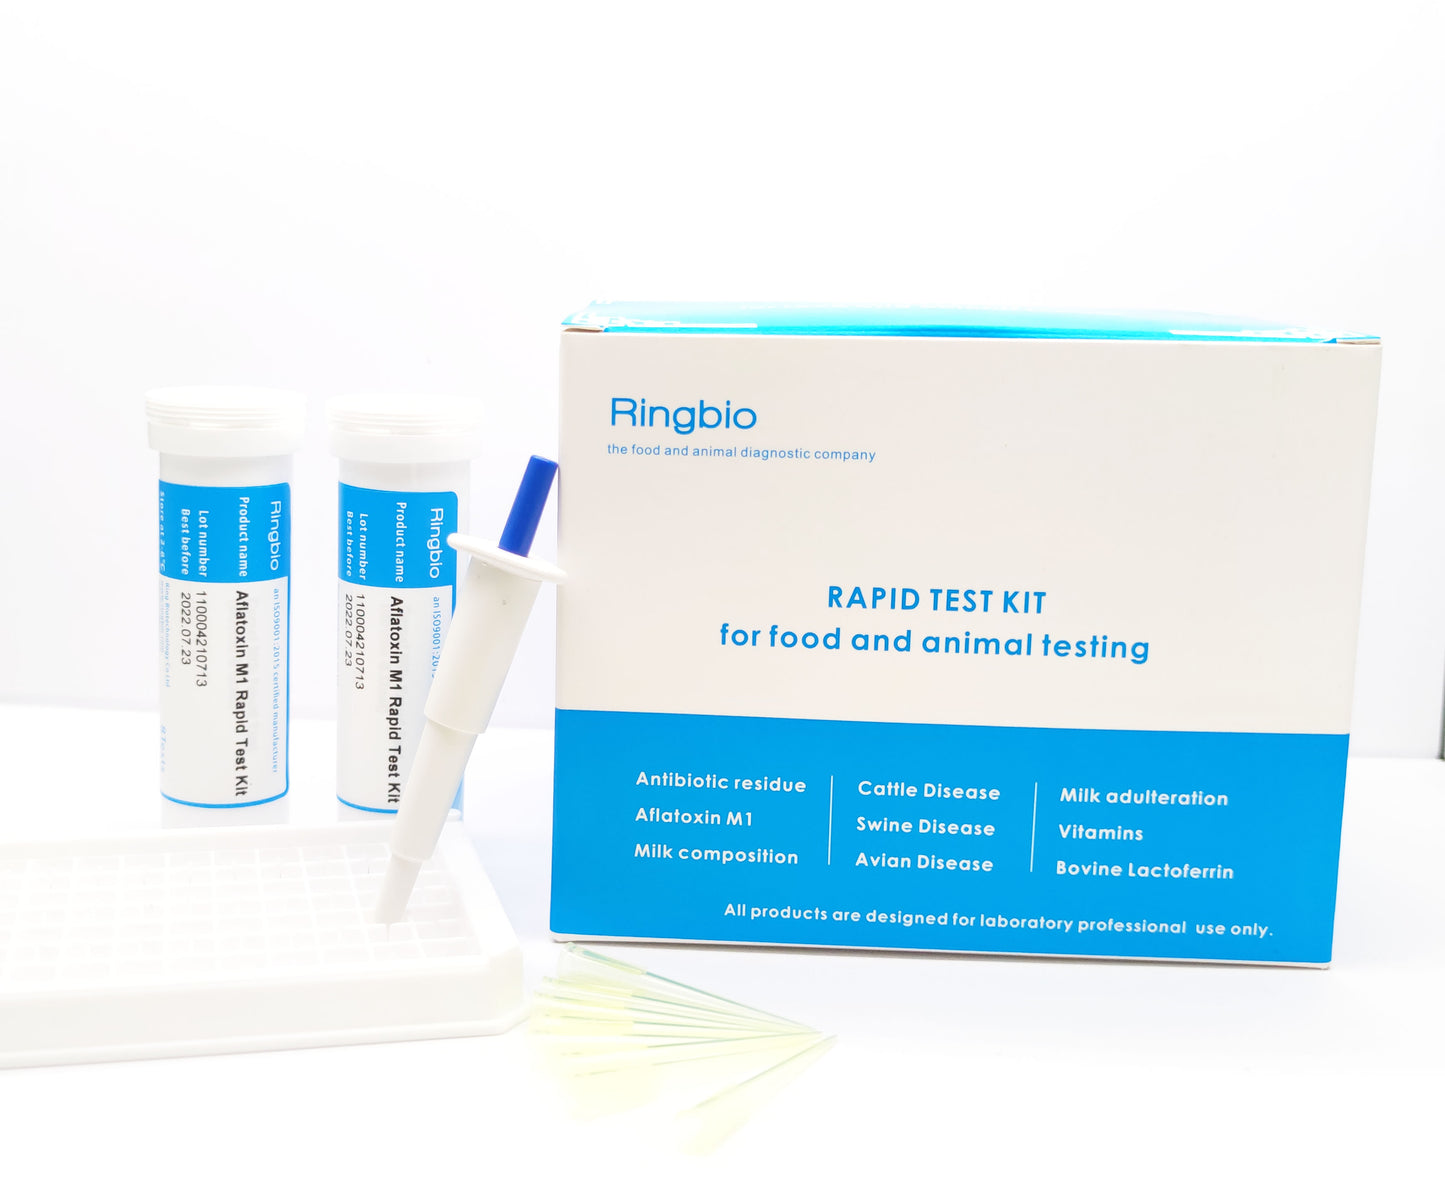 Nonylphenol polyethoxylates (NPE) Rapid Test Kit